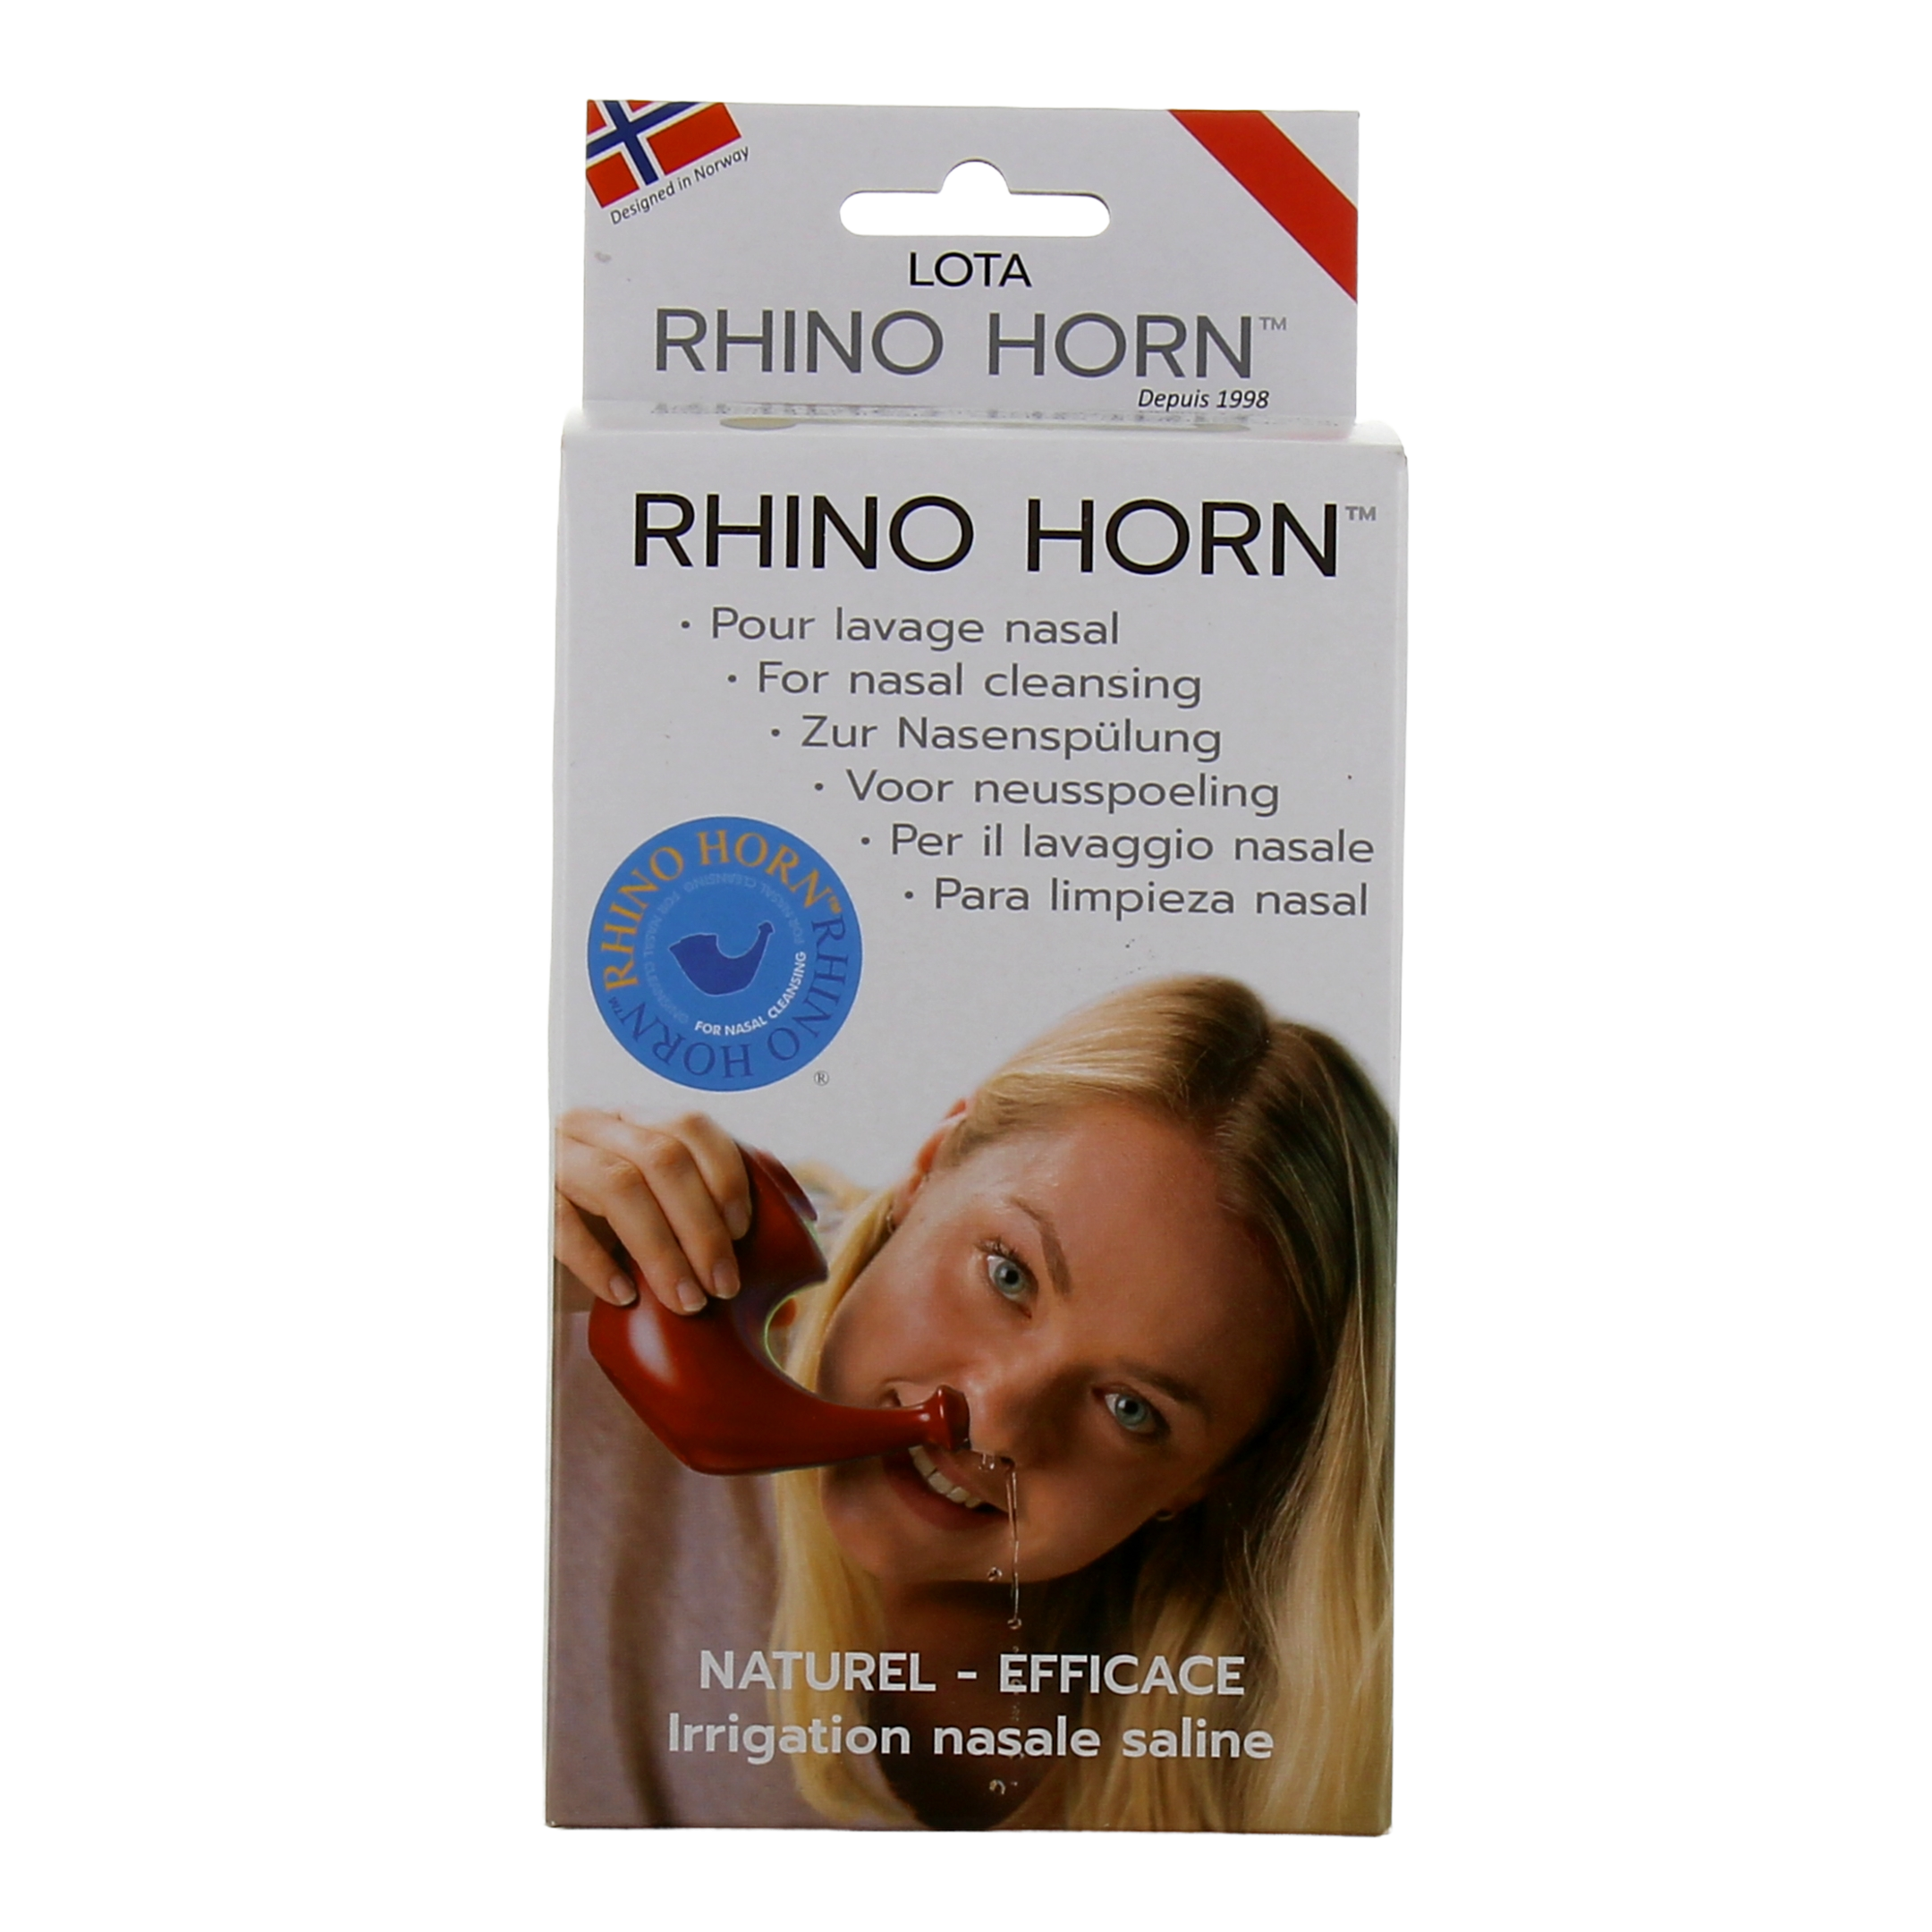 Rhino Horn Junior - Lavage nasal